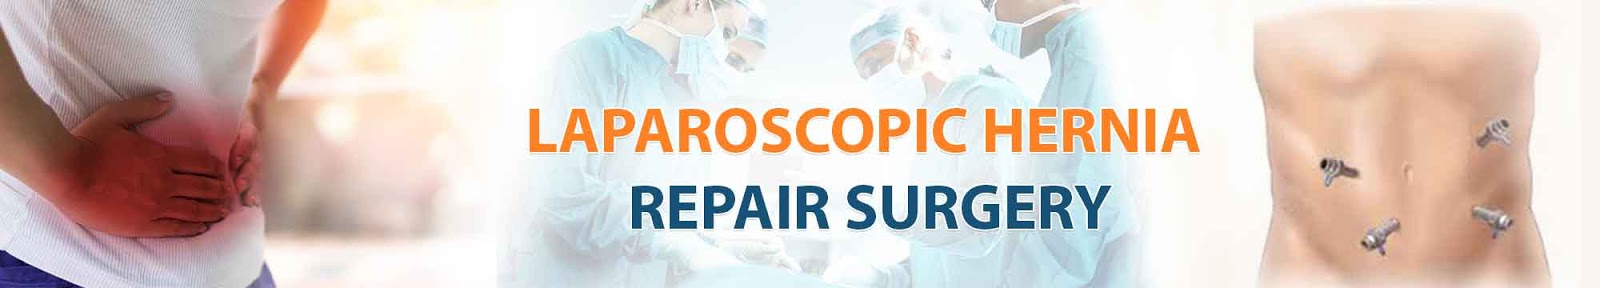 Laparoscopic Hernia Repair Surgery India